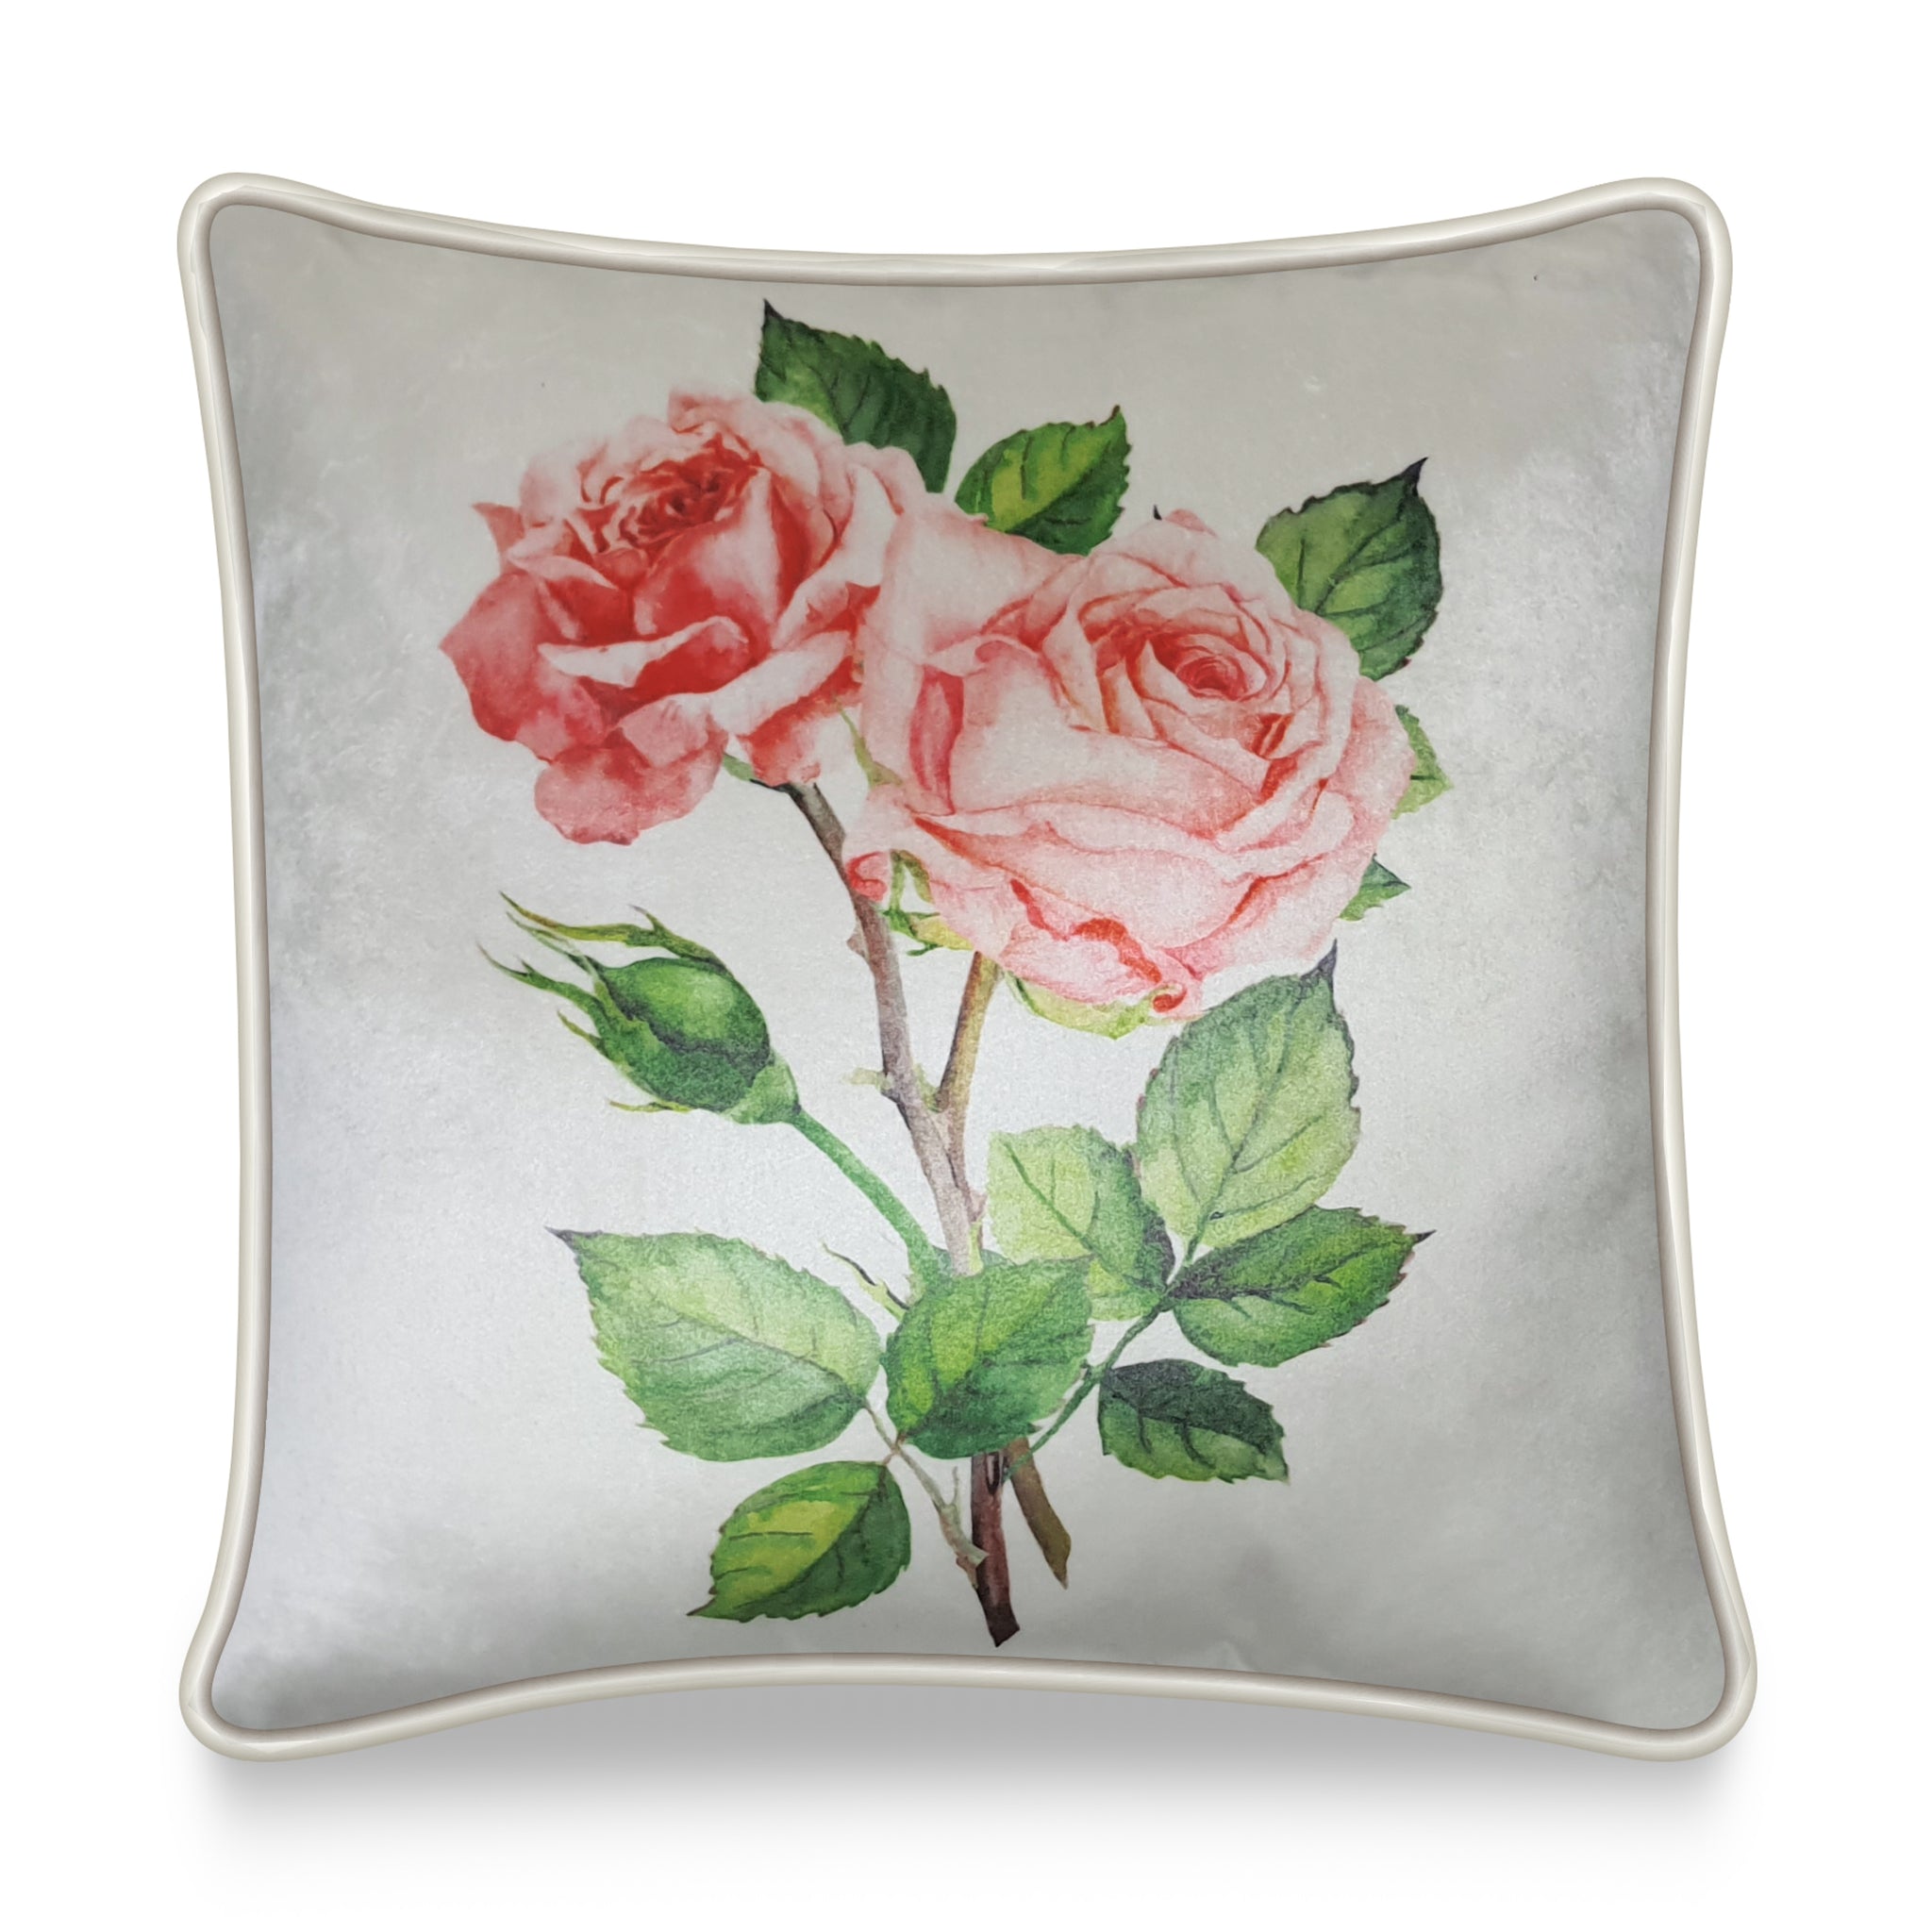 White Velvet Cushion Cover Flourish Rose Bouquet Decorative Pillowcase Classic Home Decor Throw Pillow for Sofa Chair 45x45 cm 